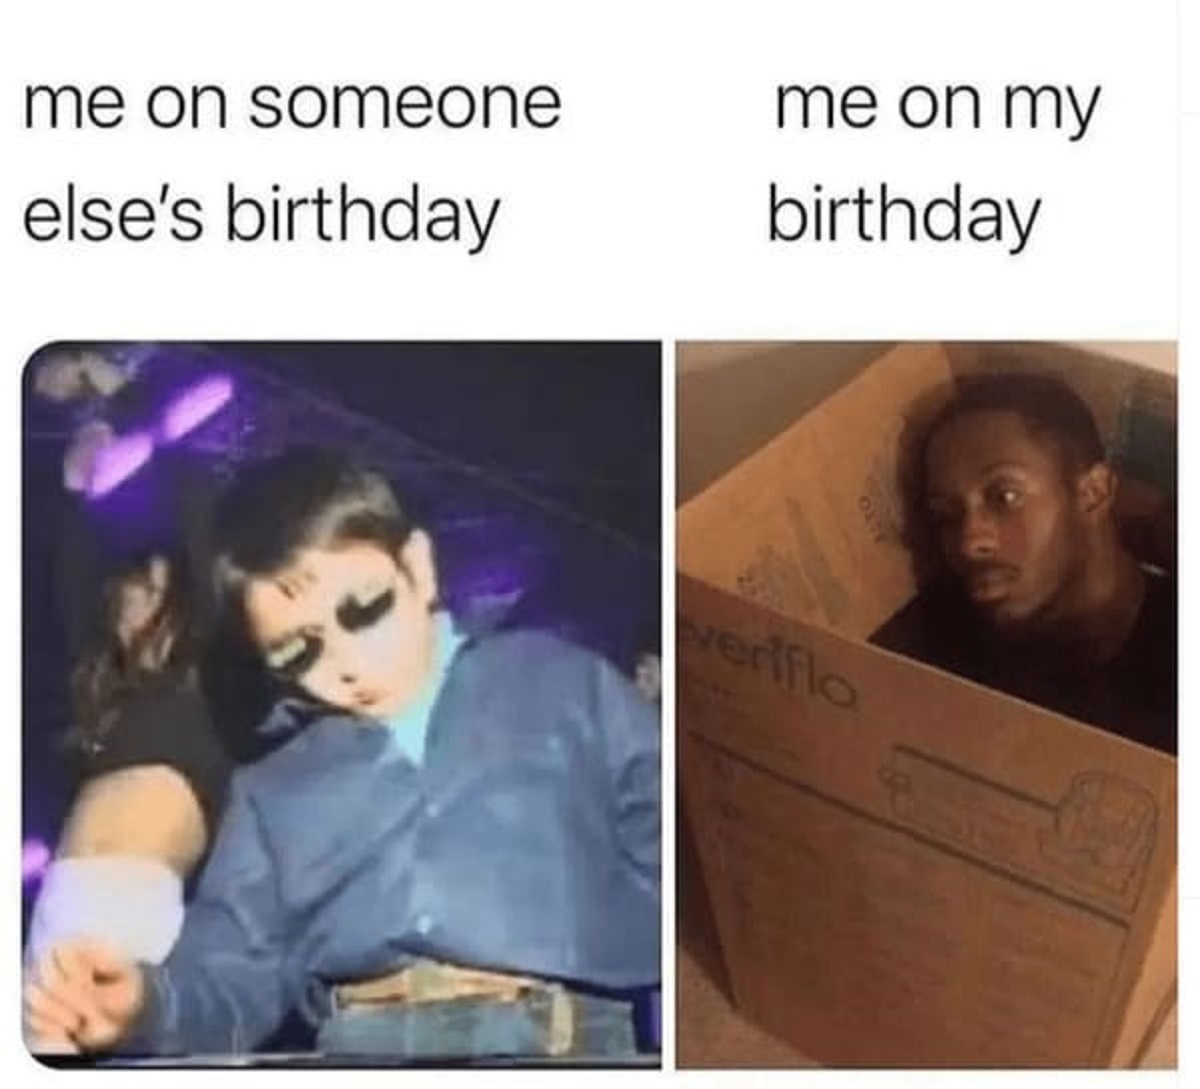 introvert memes - me on someone else's birthday me on my birthday verifla